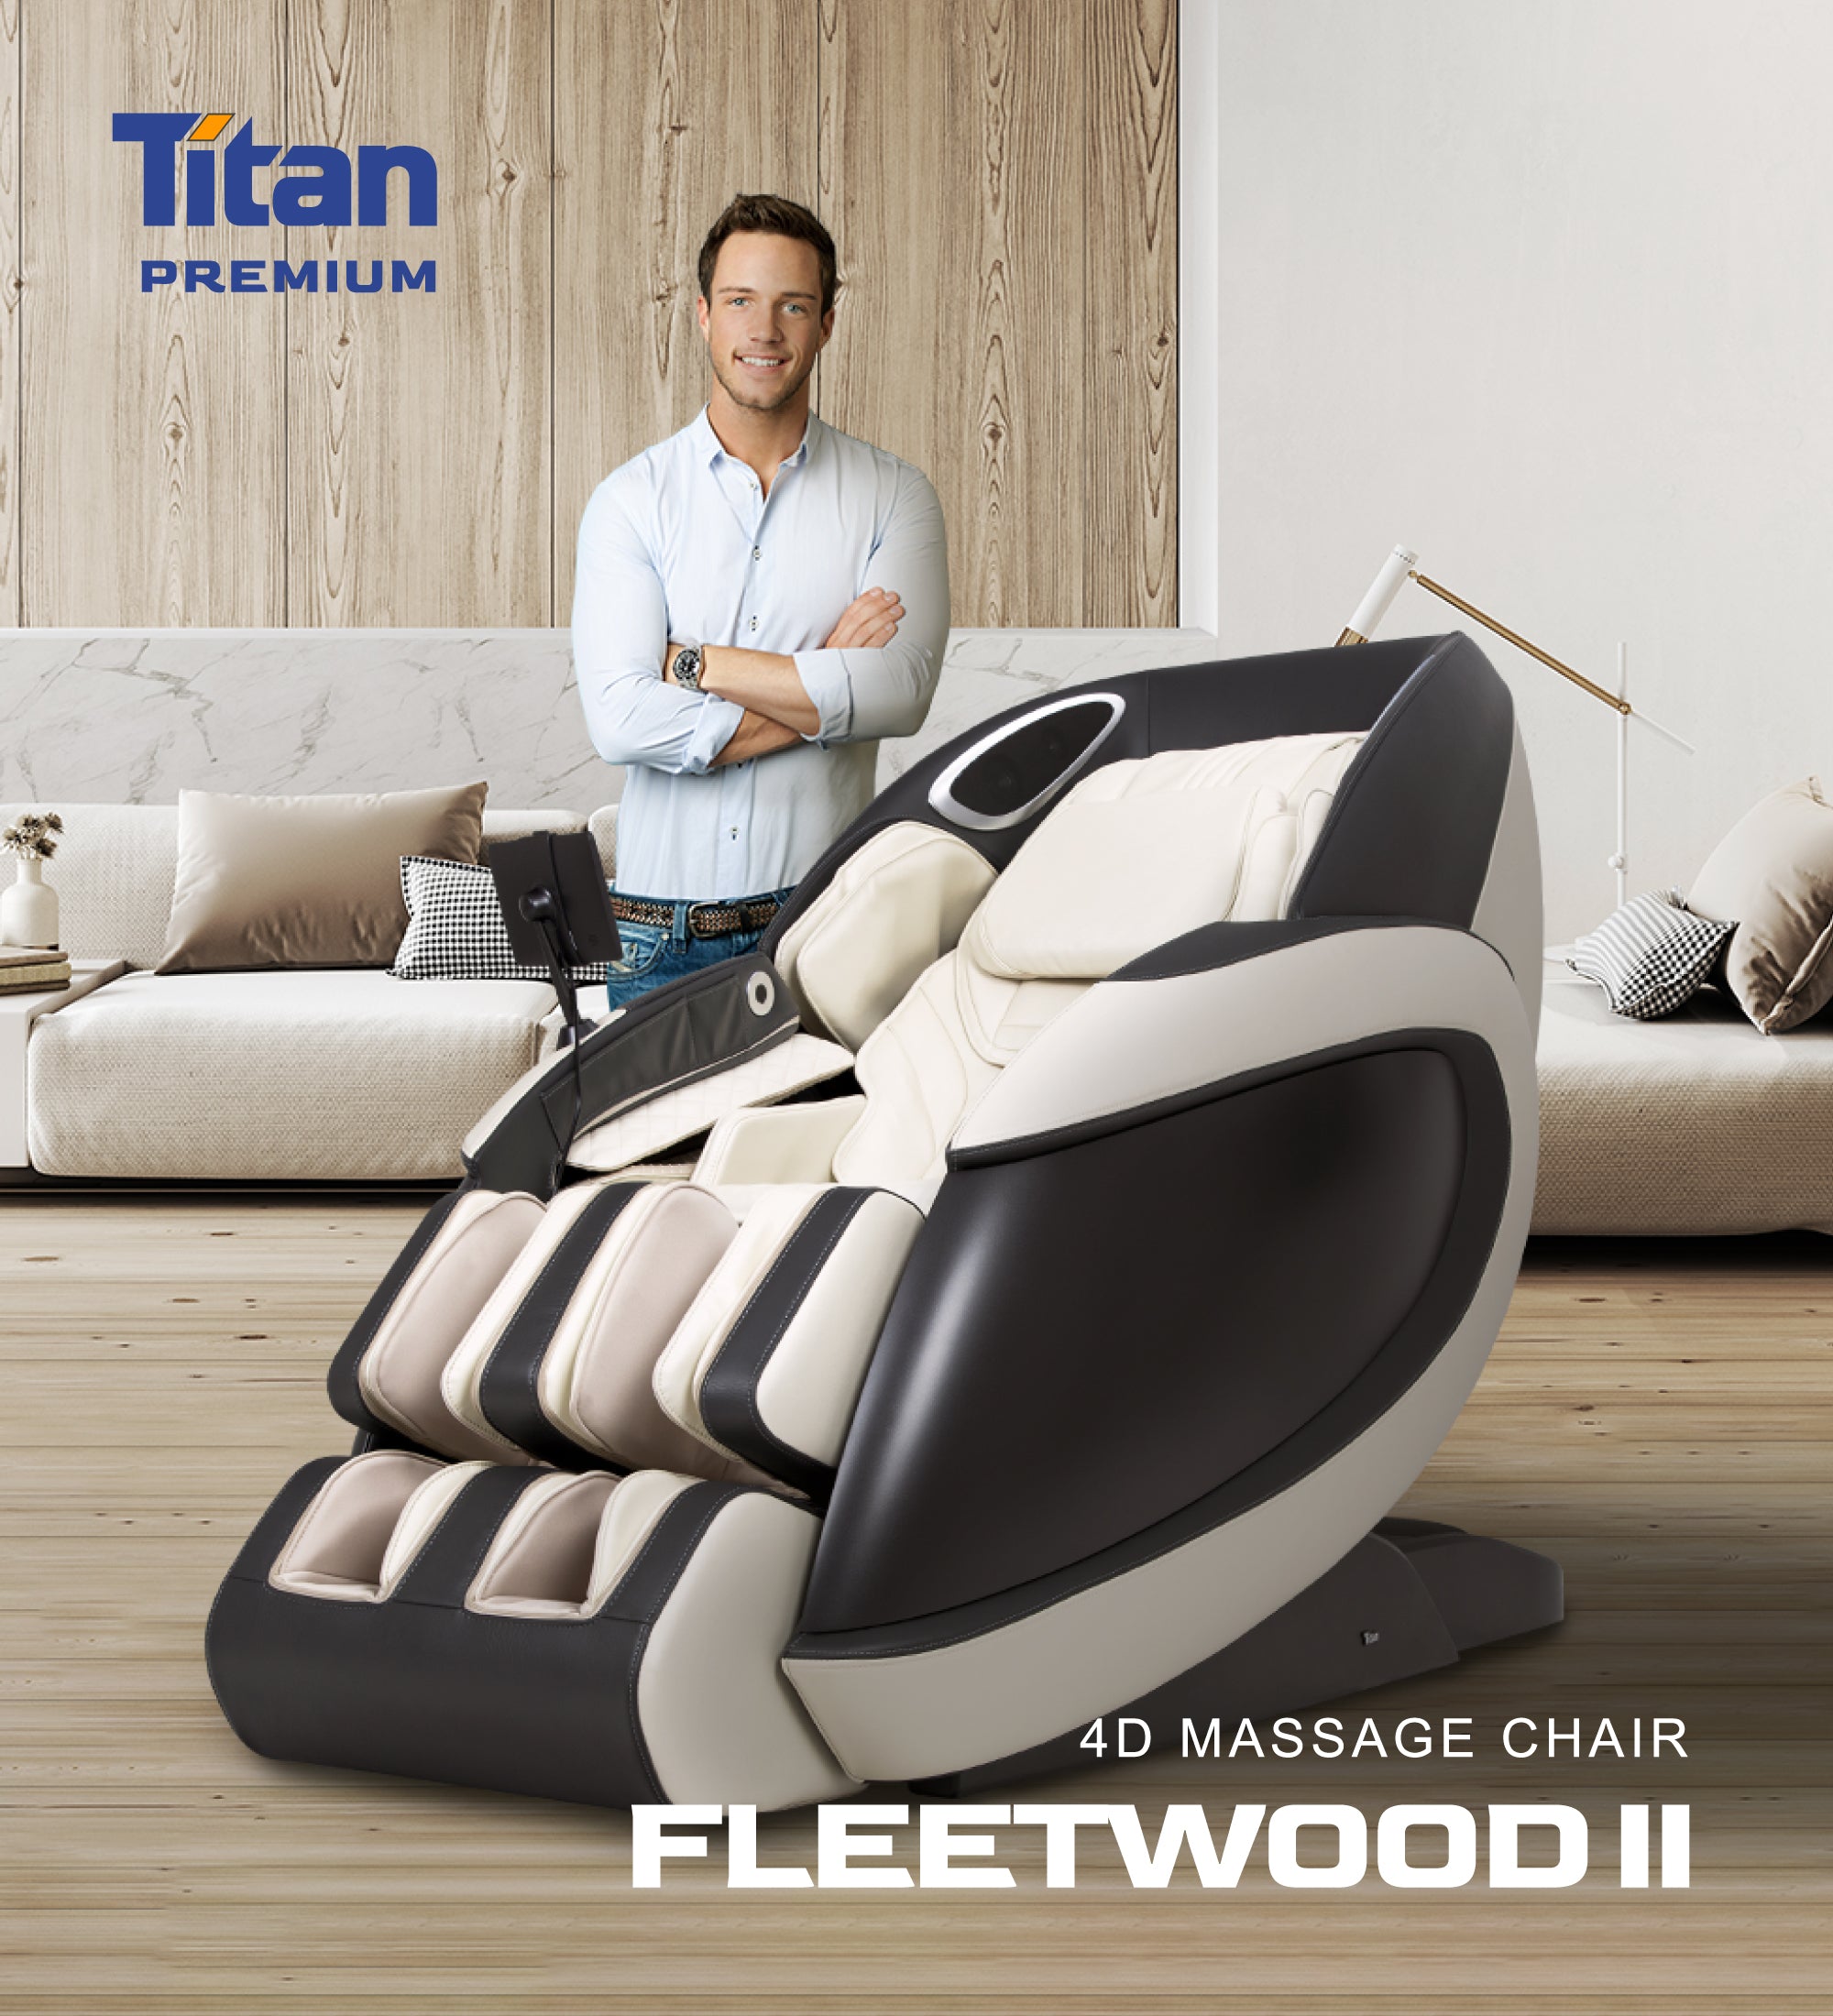 titan-fleetwood-le-massage-chair-main-image